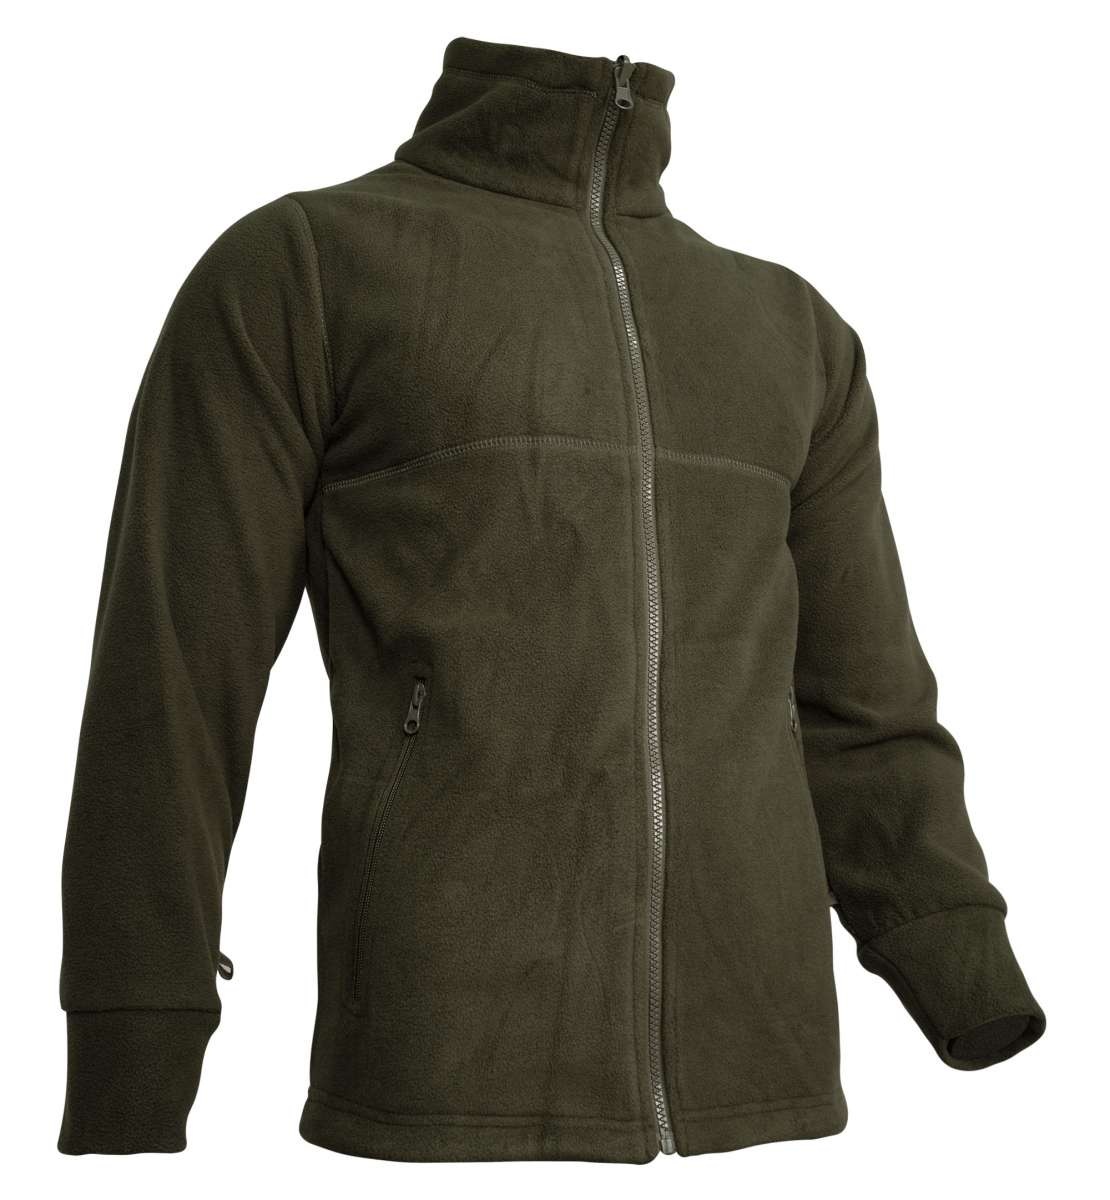 Mil-Tec Rain jacket with fleece jacket Phantomleaf WASP I Z3A